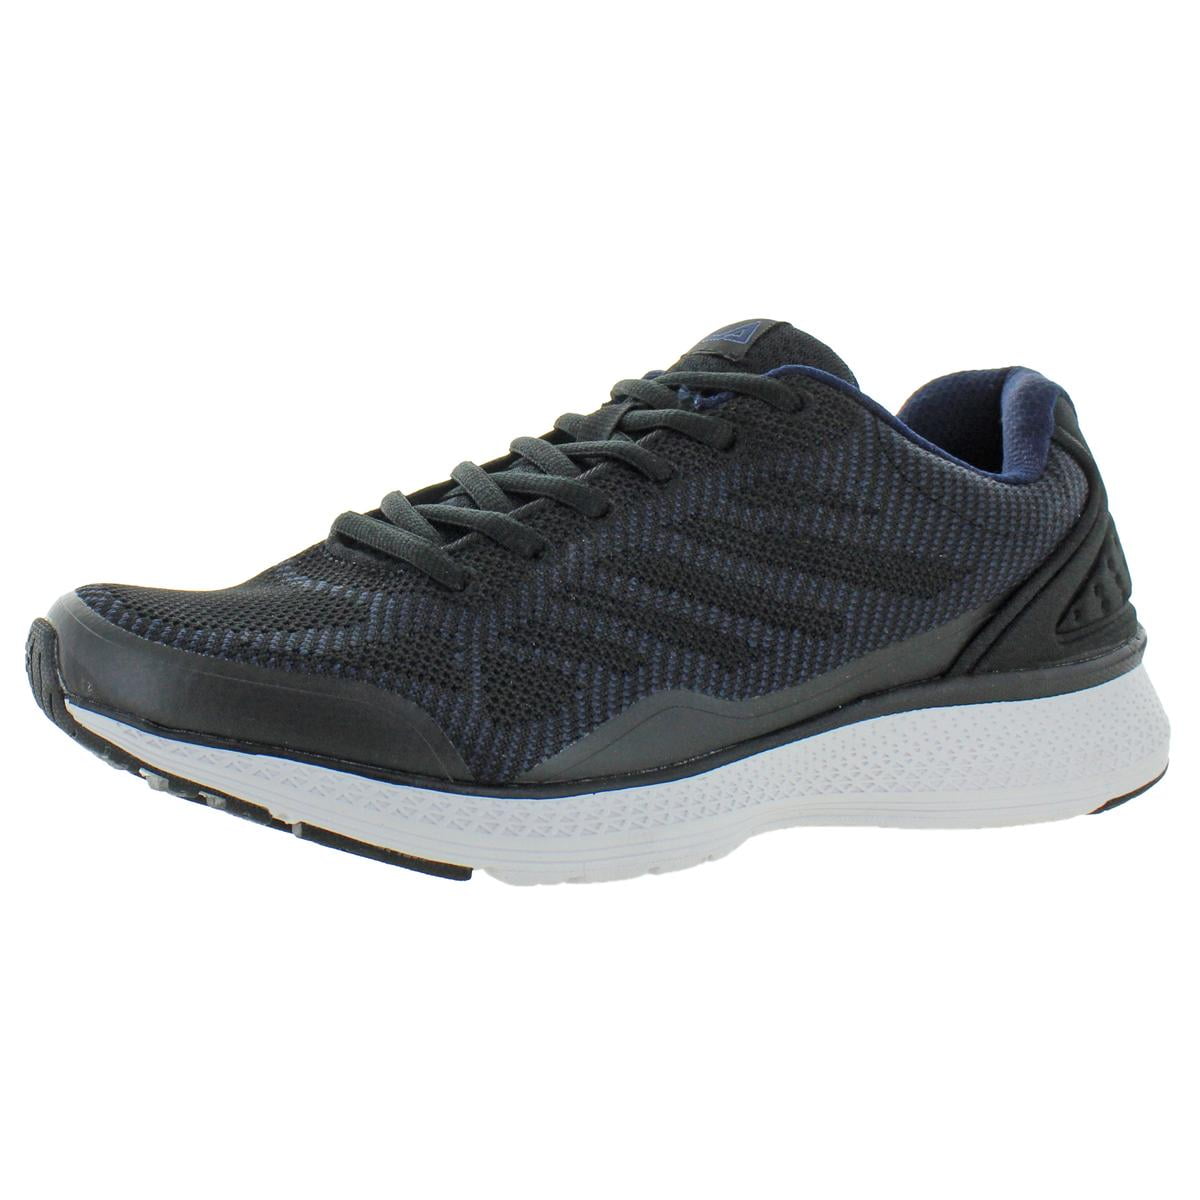 Fila Men's Memory Foam Athletic Running Shoes - Grey or Black (Navy/Black,  9 M US) 